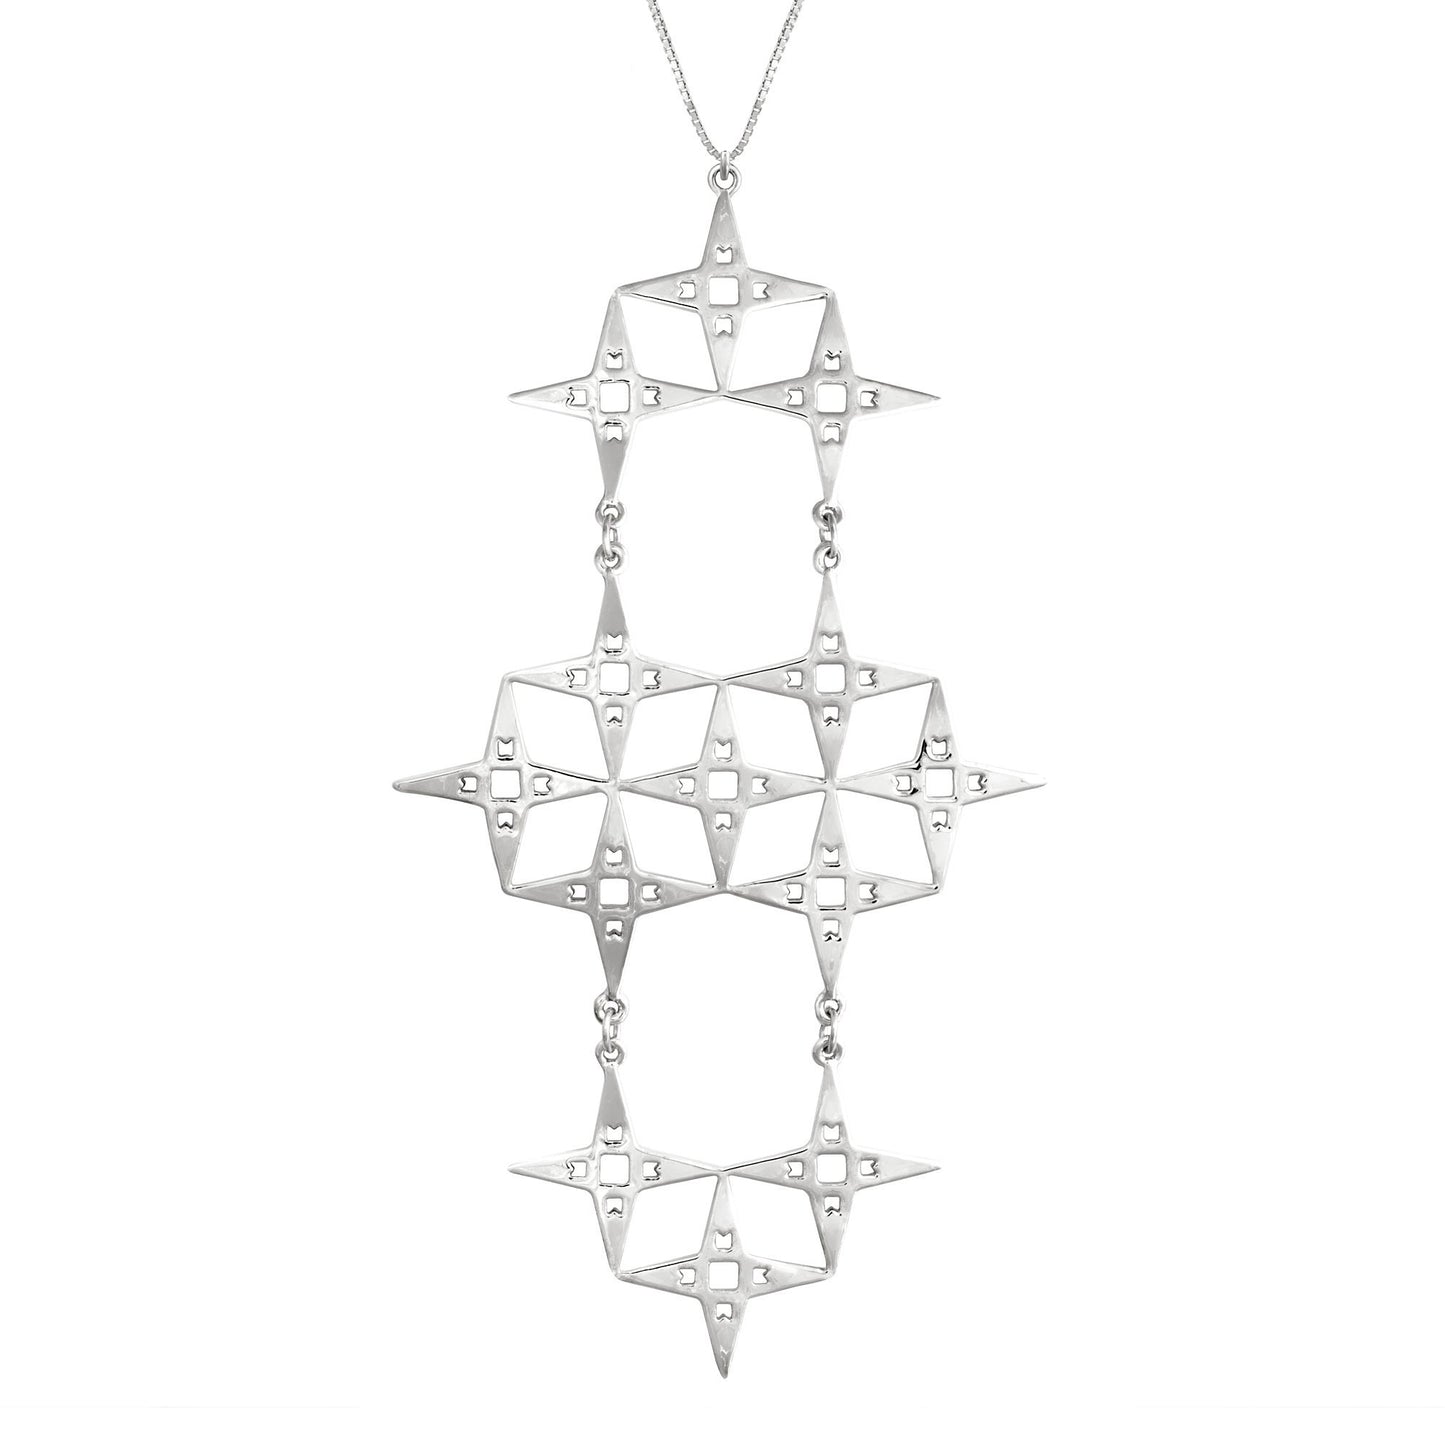 The North Star Necklace | Platinum